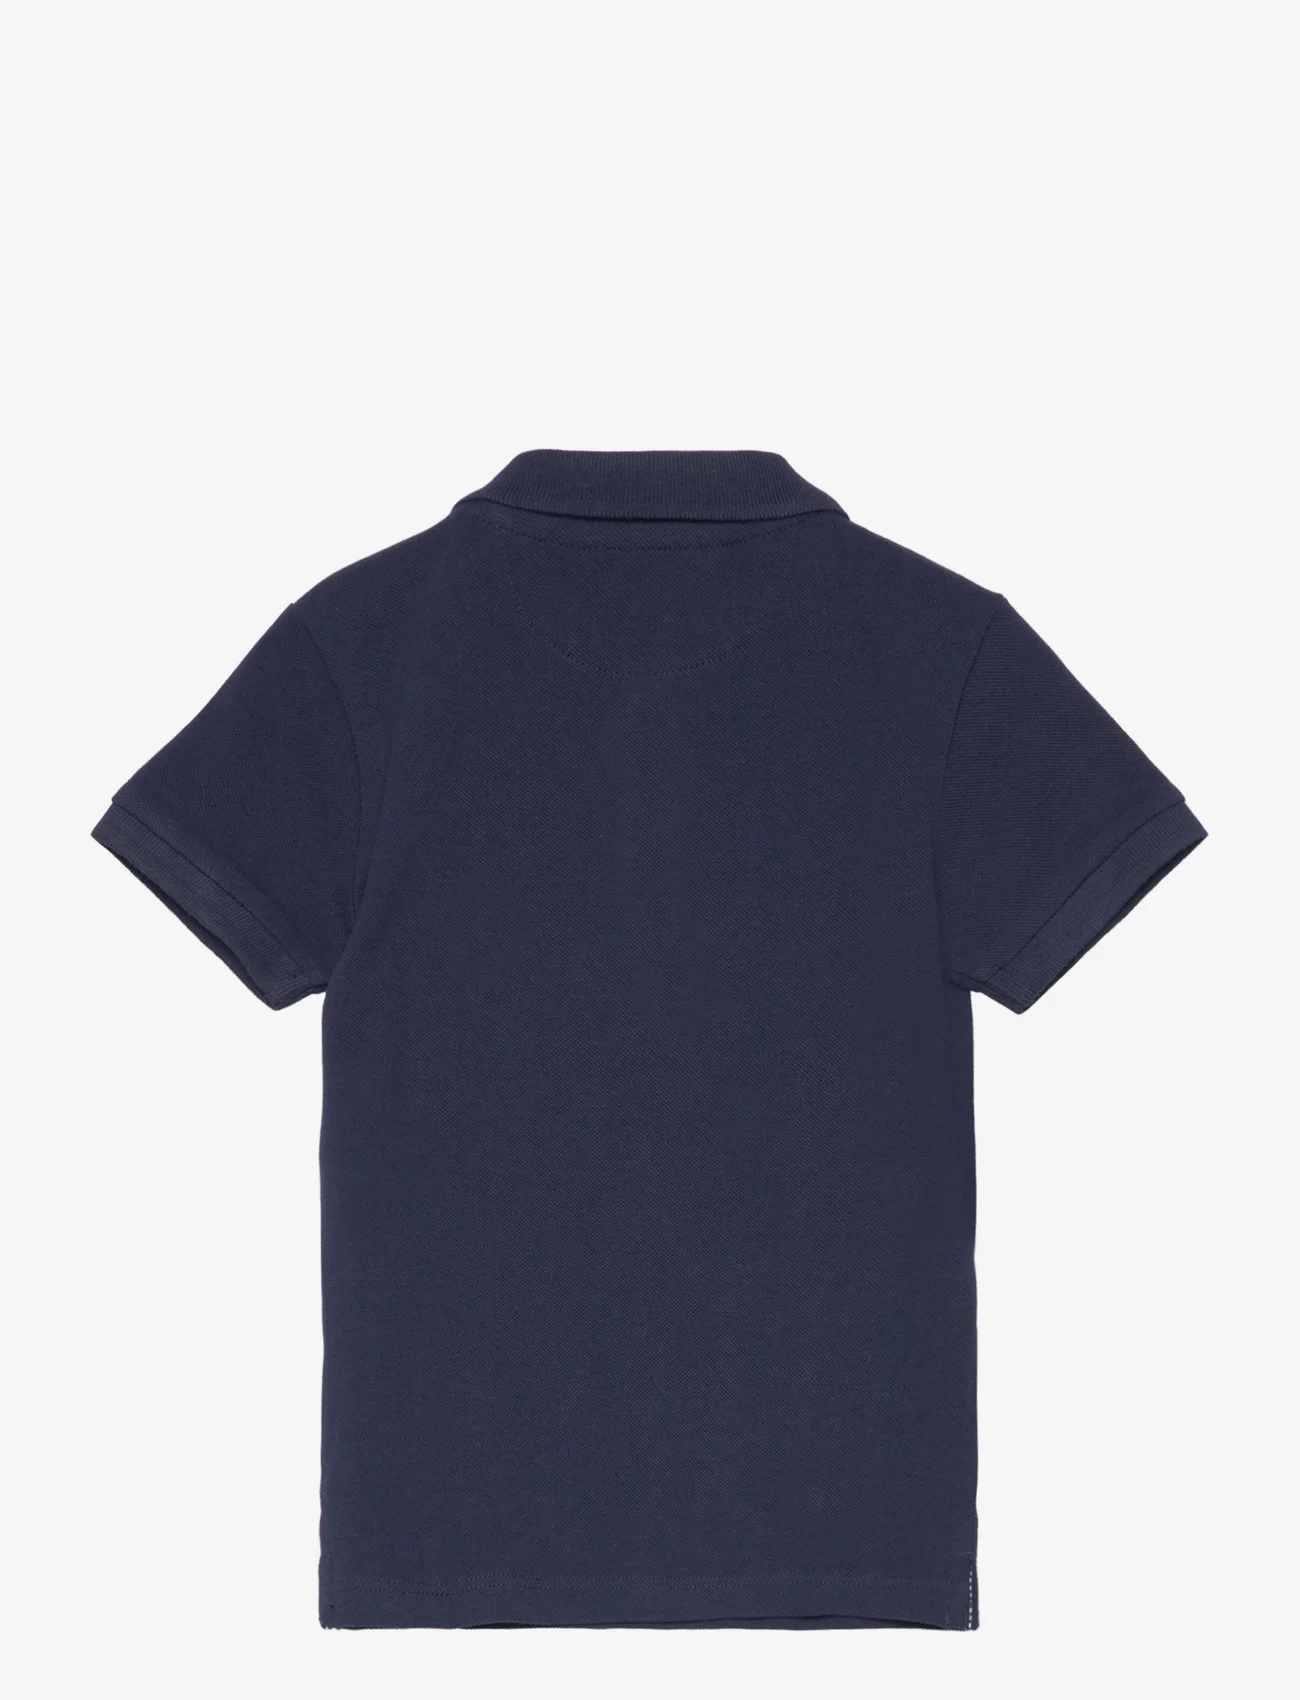 Mango - Textured cotton polo shirt - pikéer - navy - 1